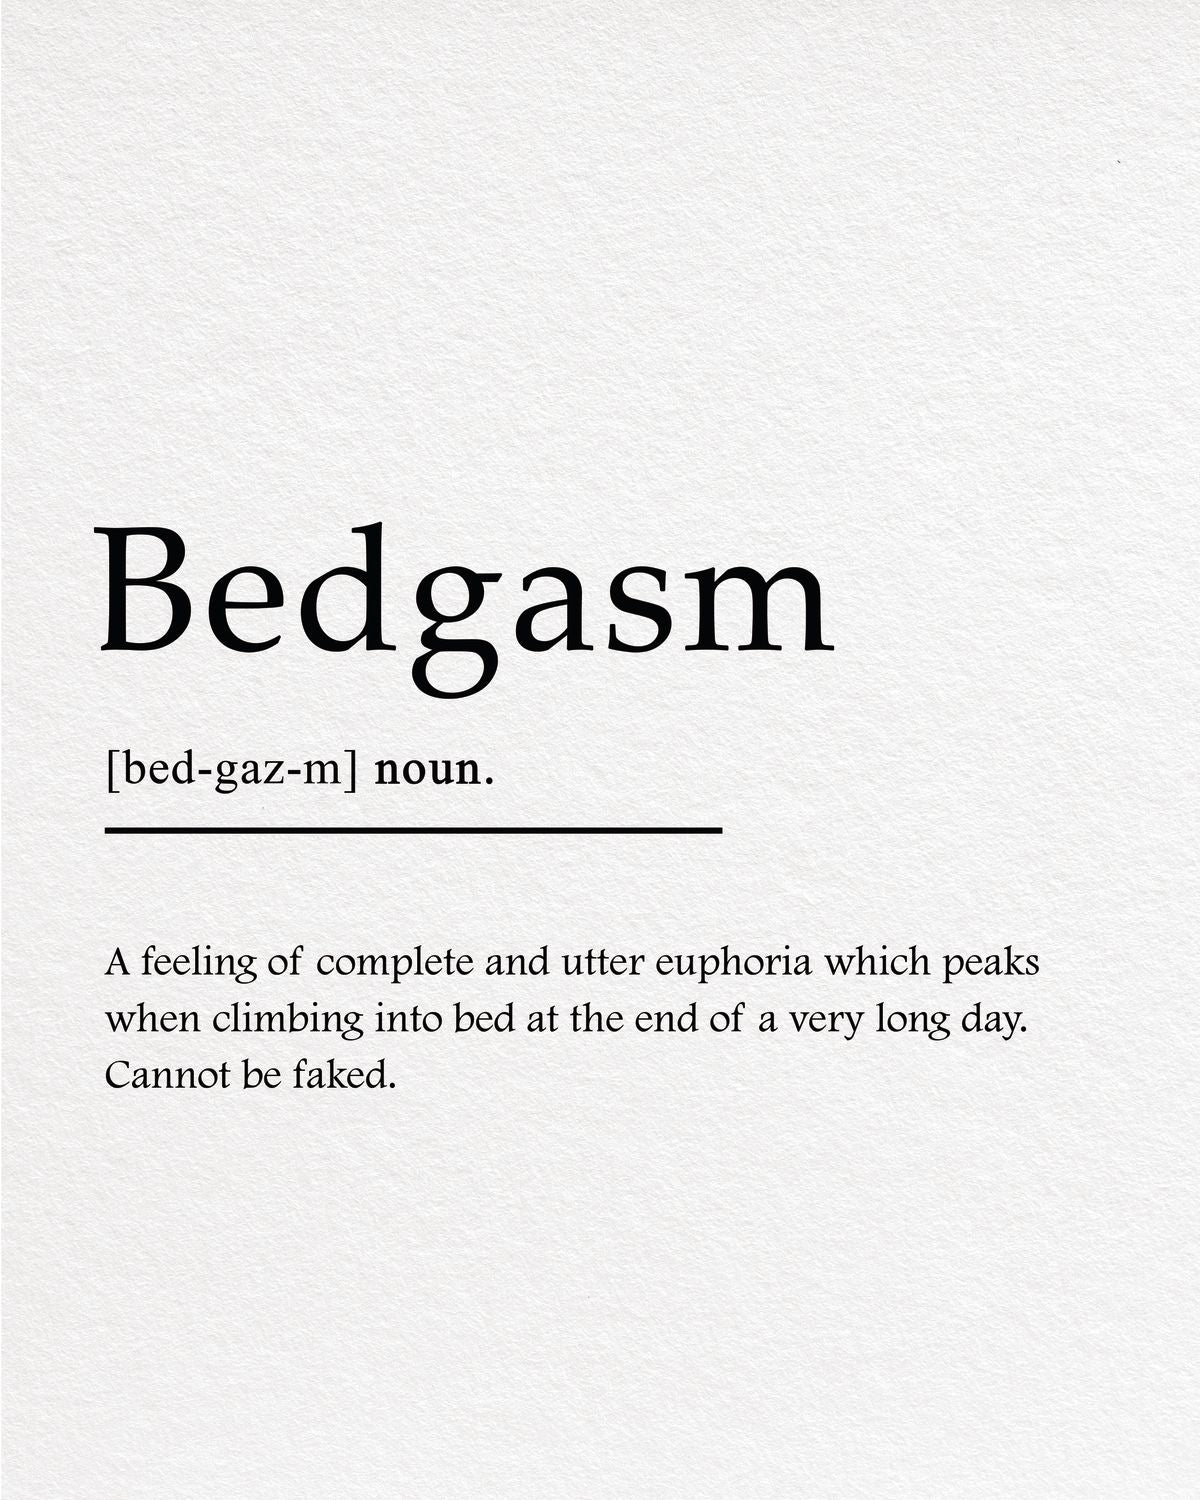 Bedgasm Definition Typography